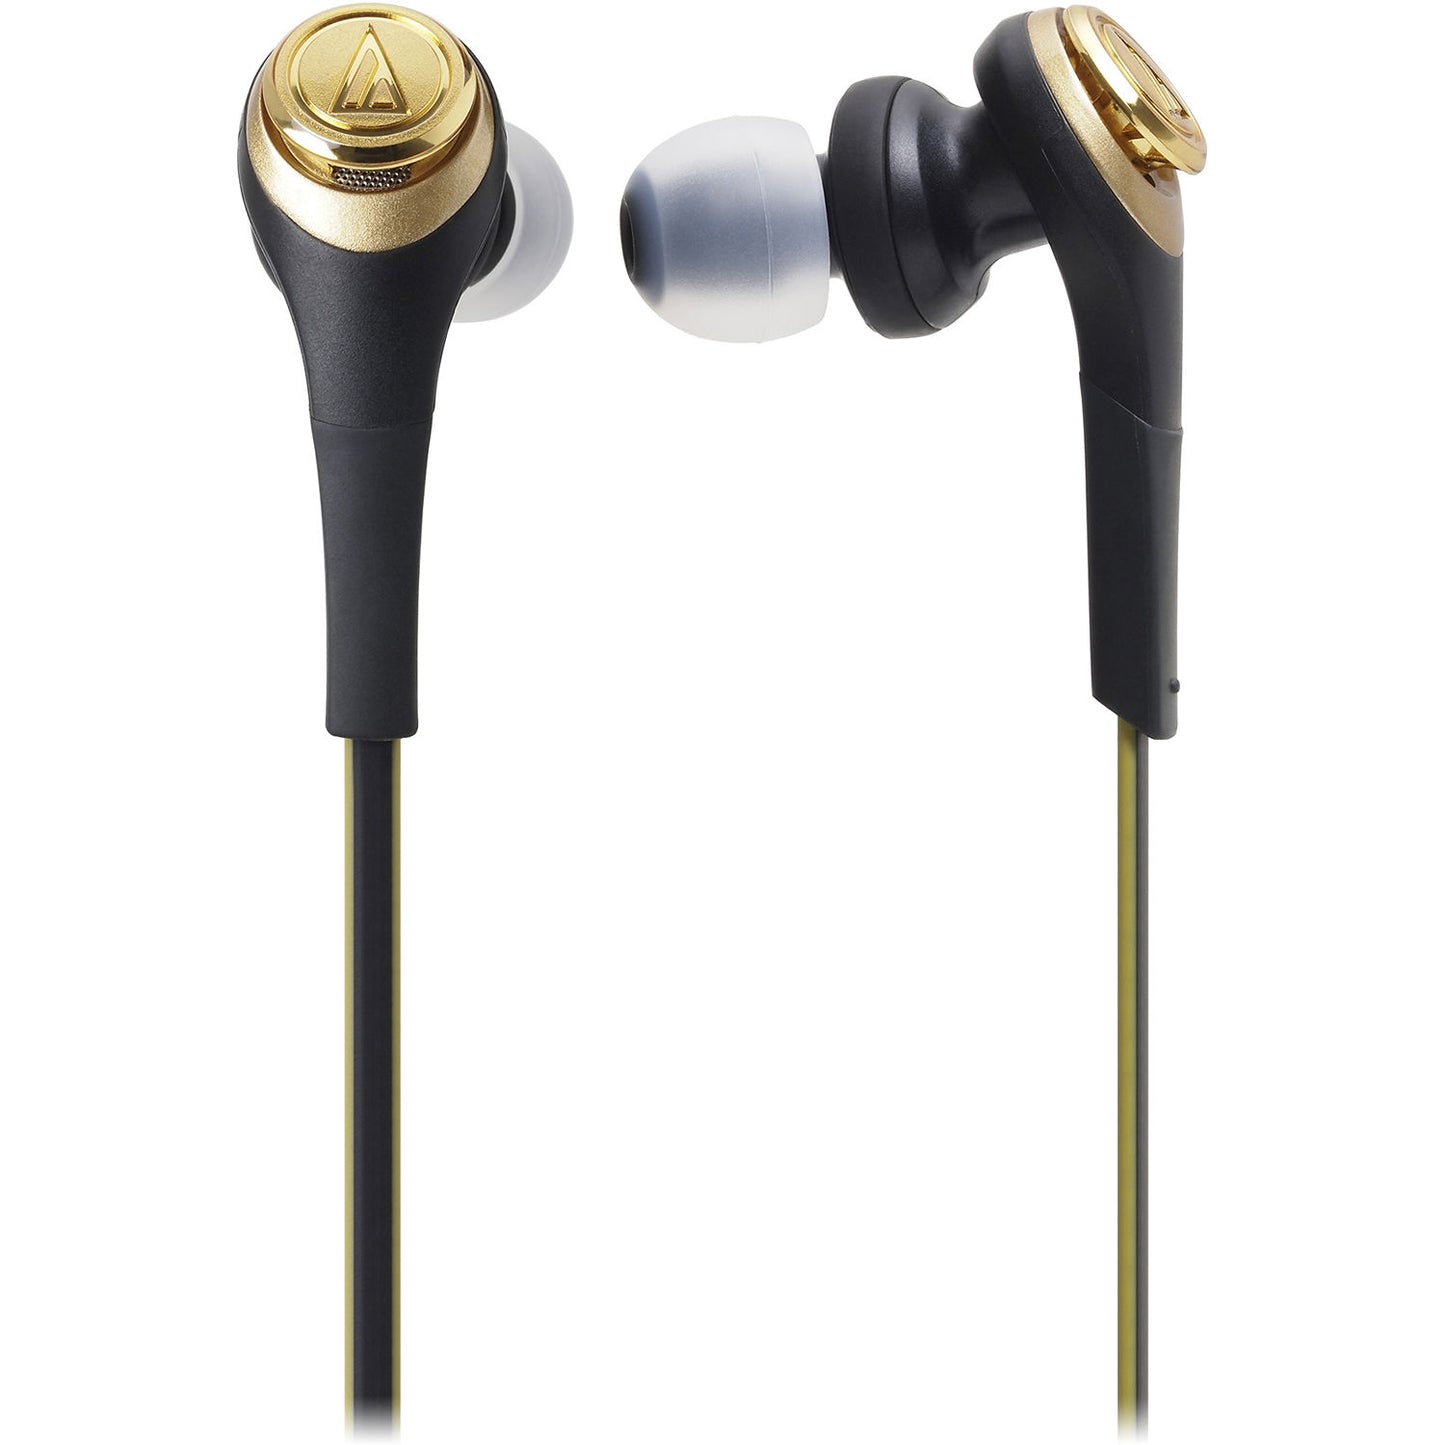 Audio-Technica ATH-CKS550BT Solid Bass Wireless In-Ear Headphones, Black/Gold